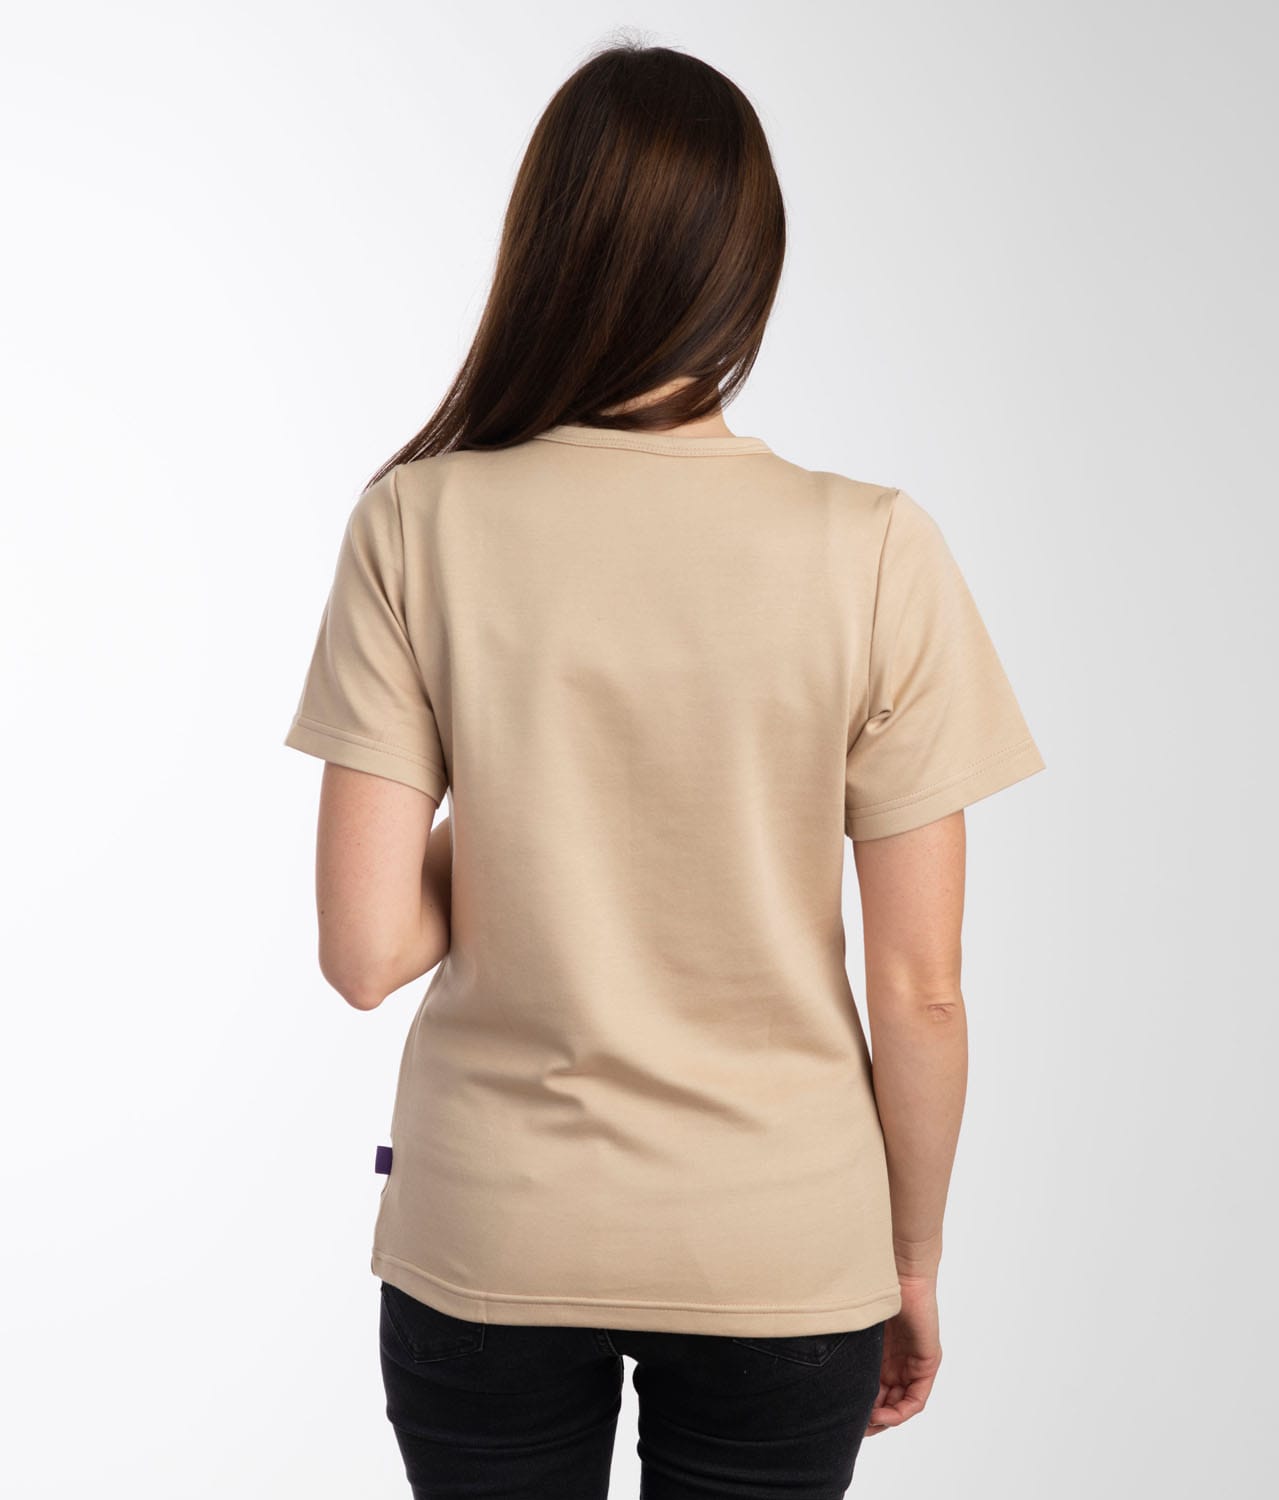 Anti-Radiation T-Shirt for Women